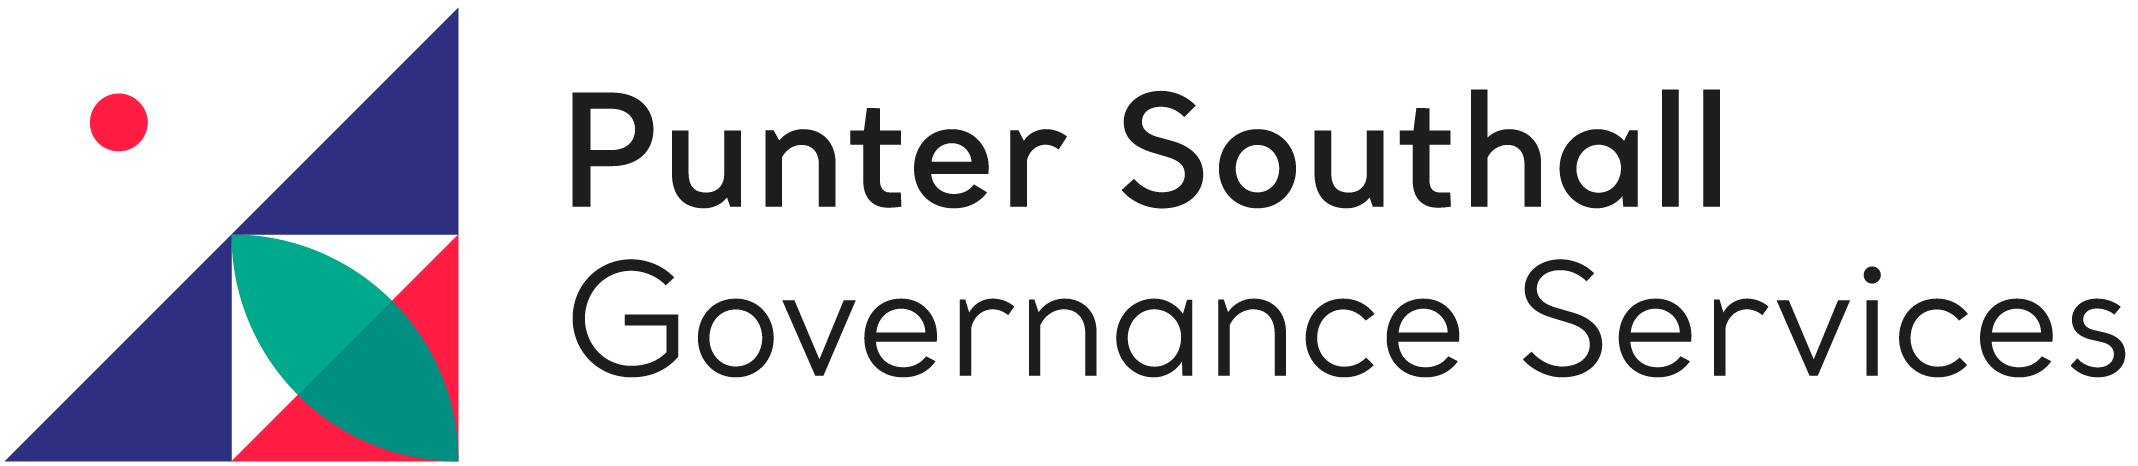 Punter Southall Governance Services logo